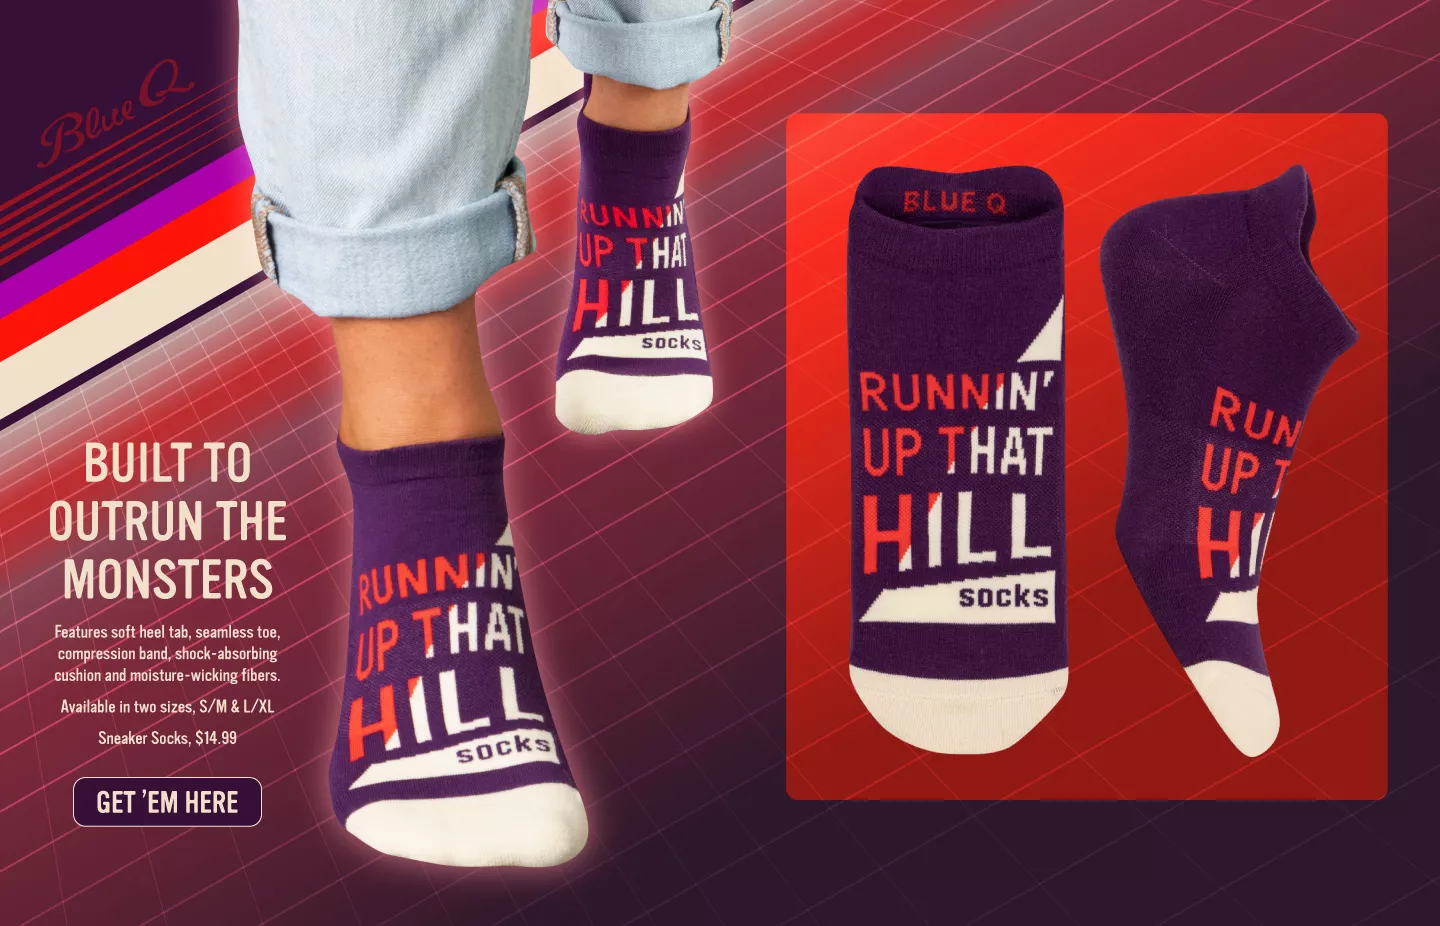 New Sneaker Socks from Blue Q! Runnin' Up That Hill Sneaker Socks, Built to Outrun the Monsters!